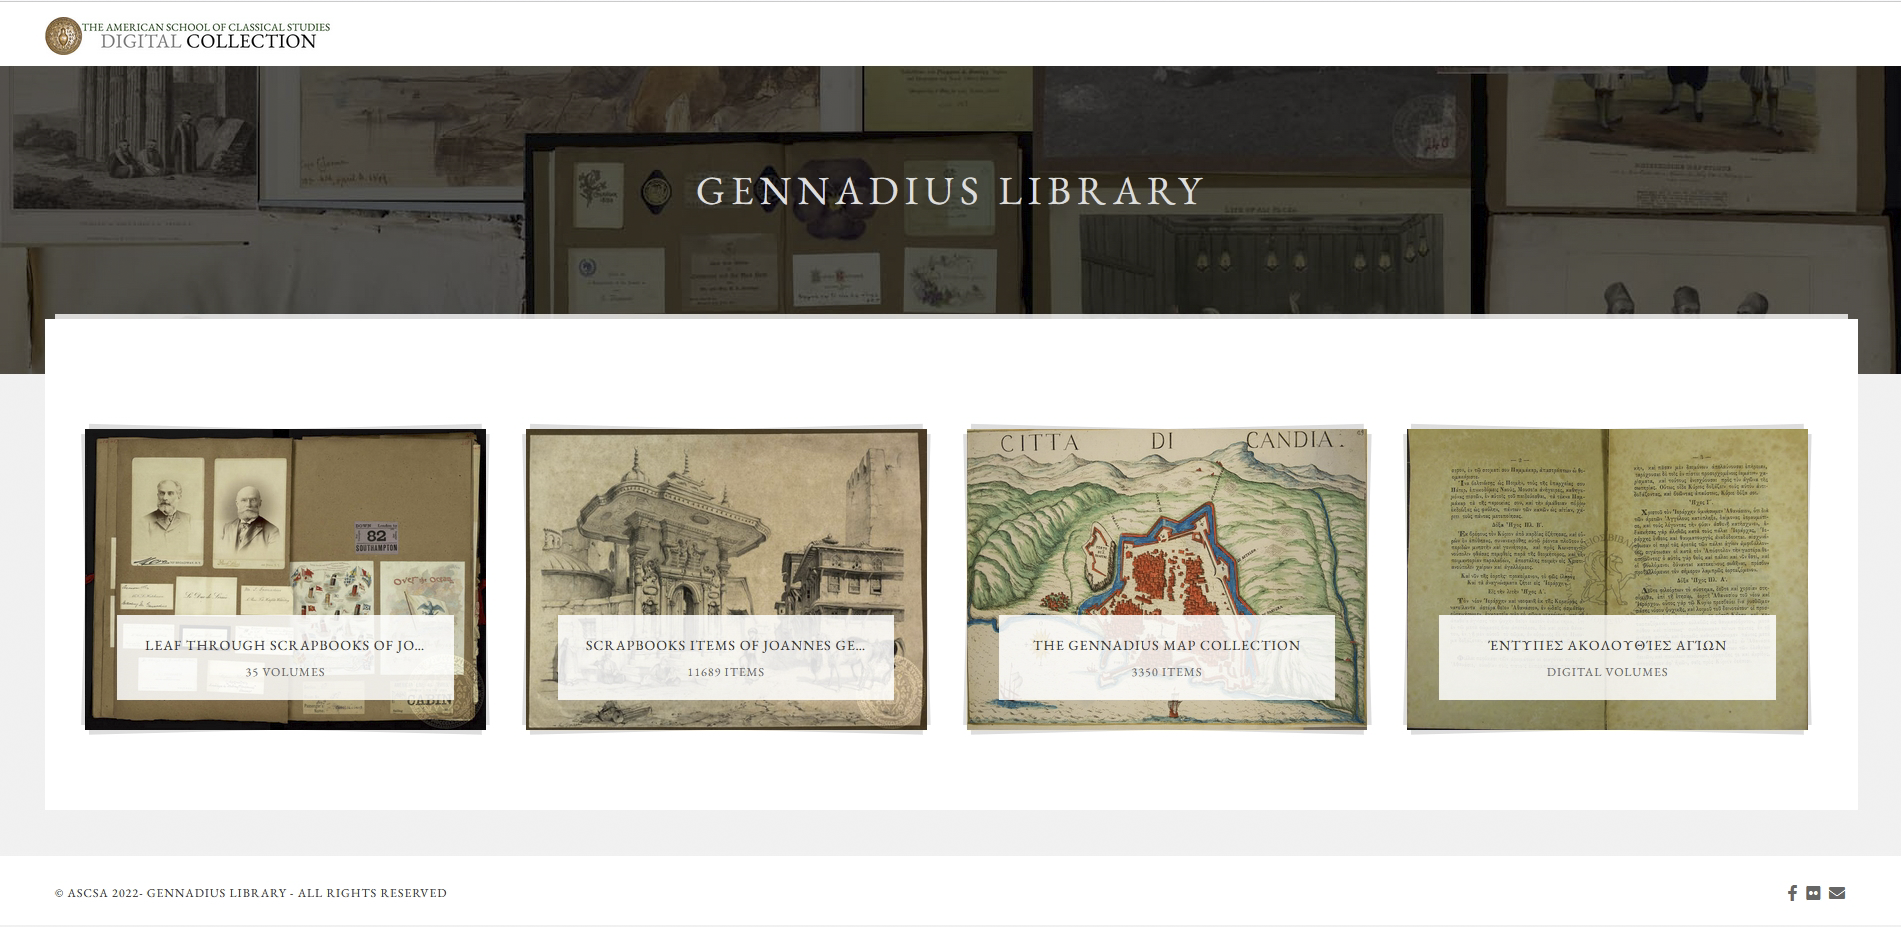  Gennadius Digital Collections